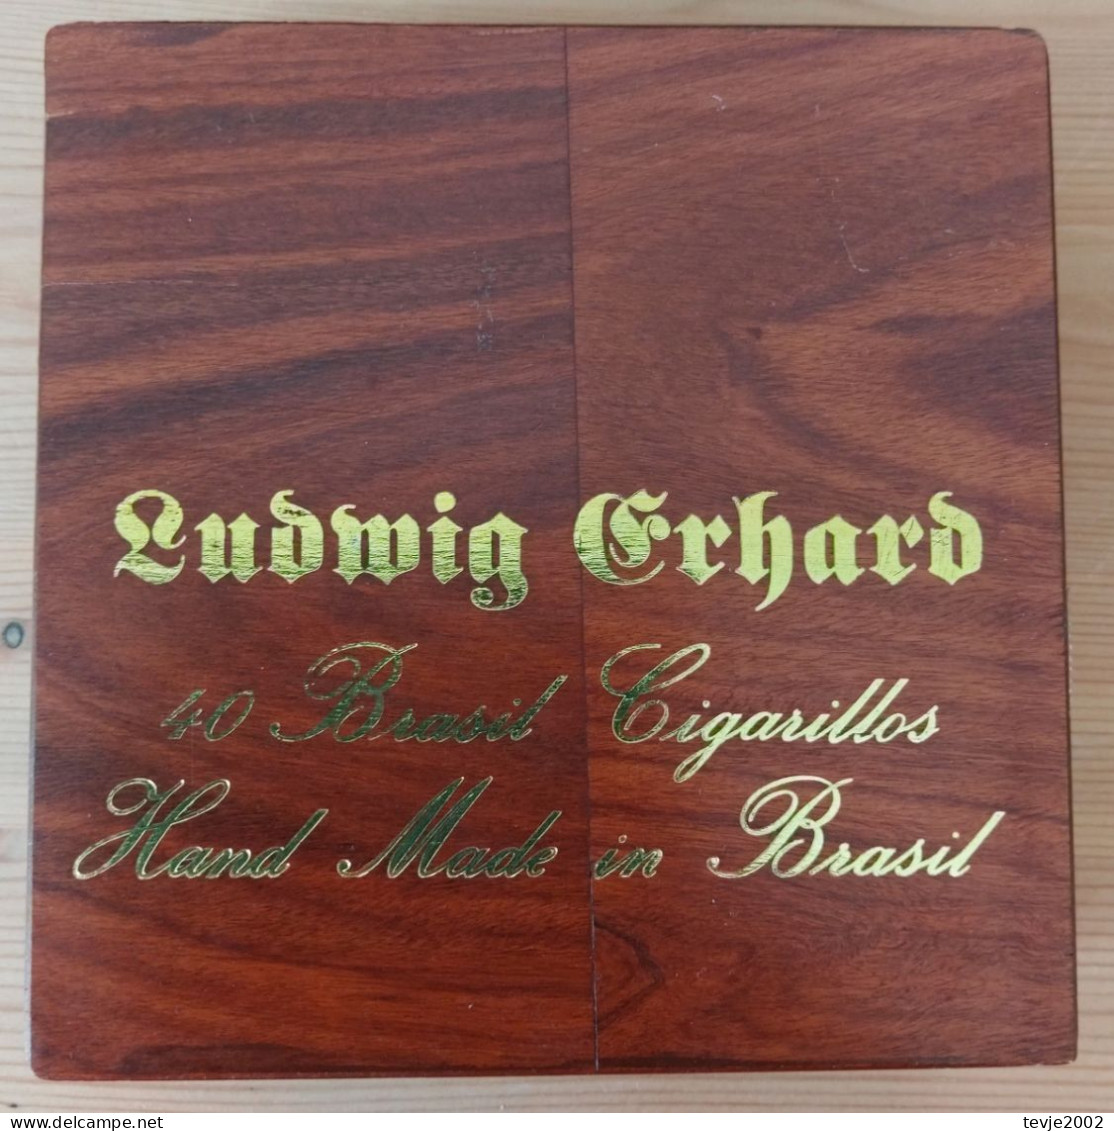 Zigarrenkiste - Ludwig Erhard - Hand Made In Brasil - Suerdieck - Empty Cigar Cabinet